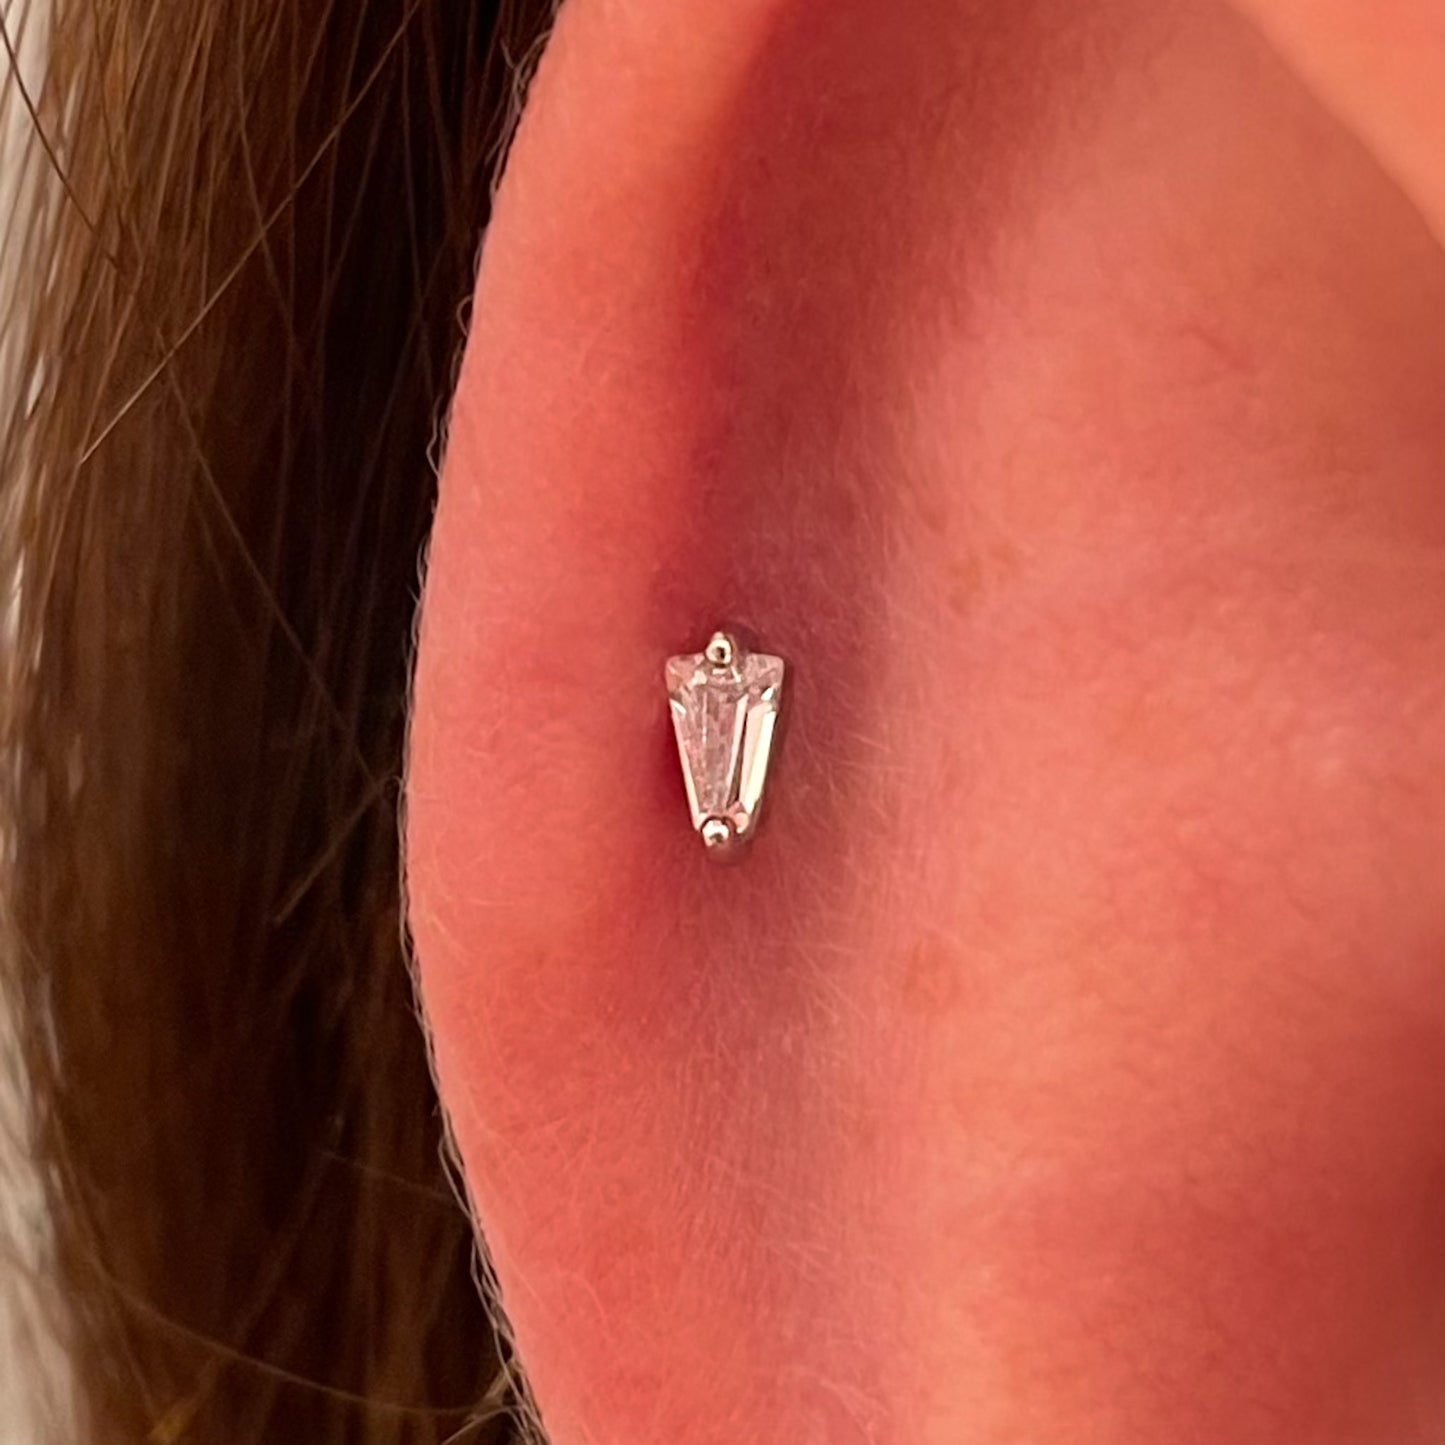 9k solid white gold tiny fan crystal flat back labret stud earring 6mm